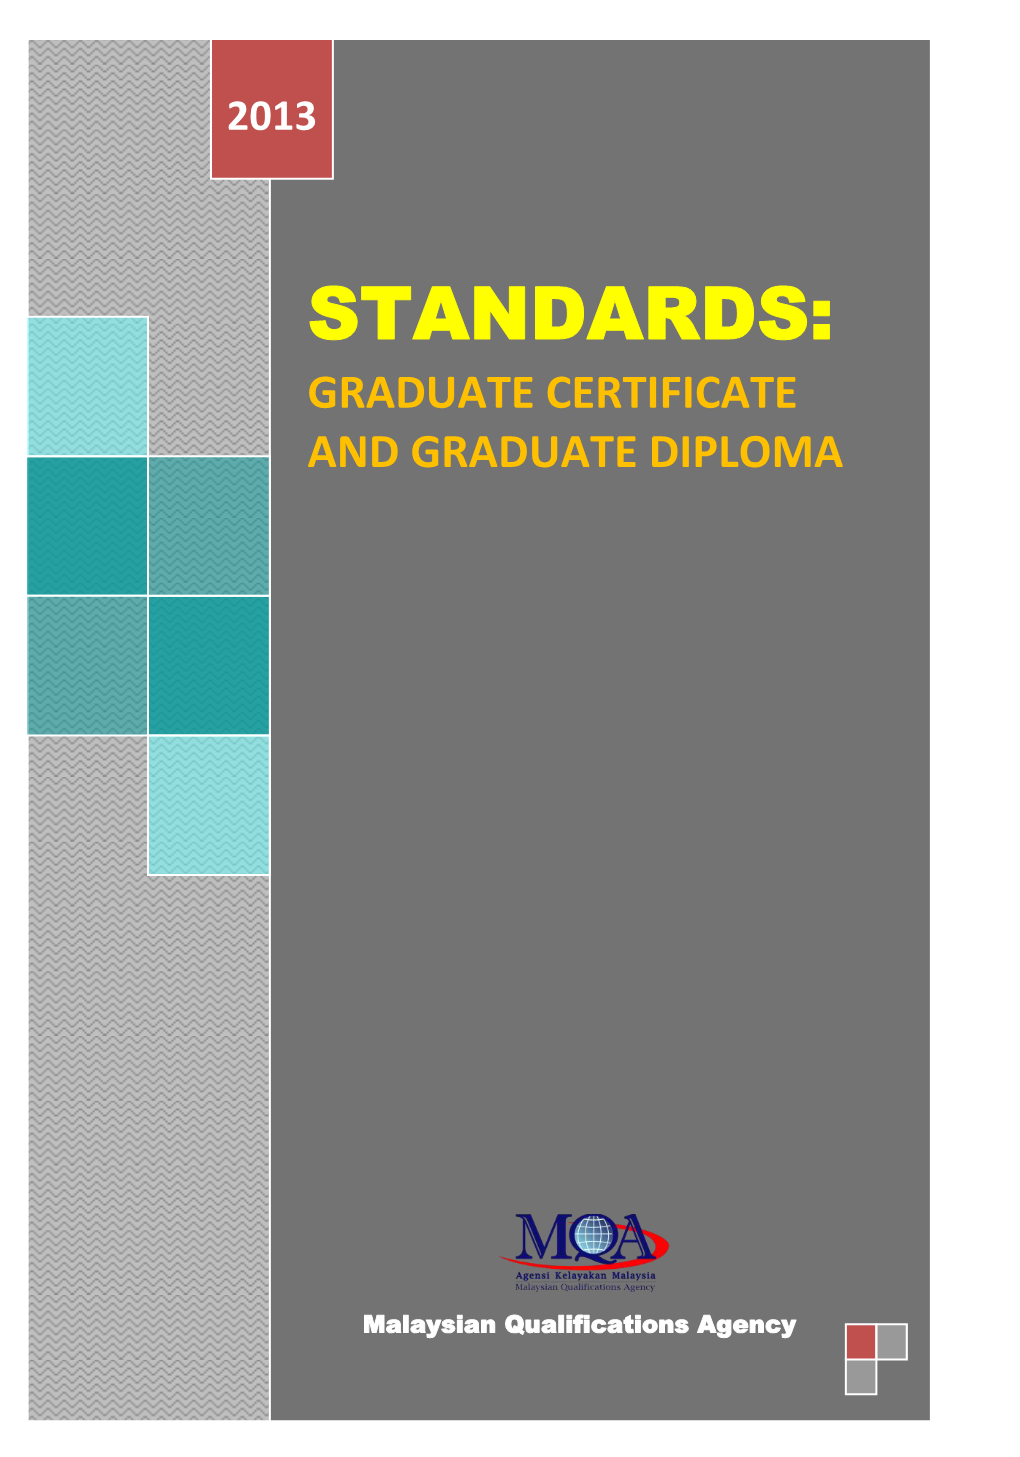 Standards for Graduate Certificate and Graduate Diploma